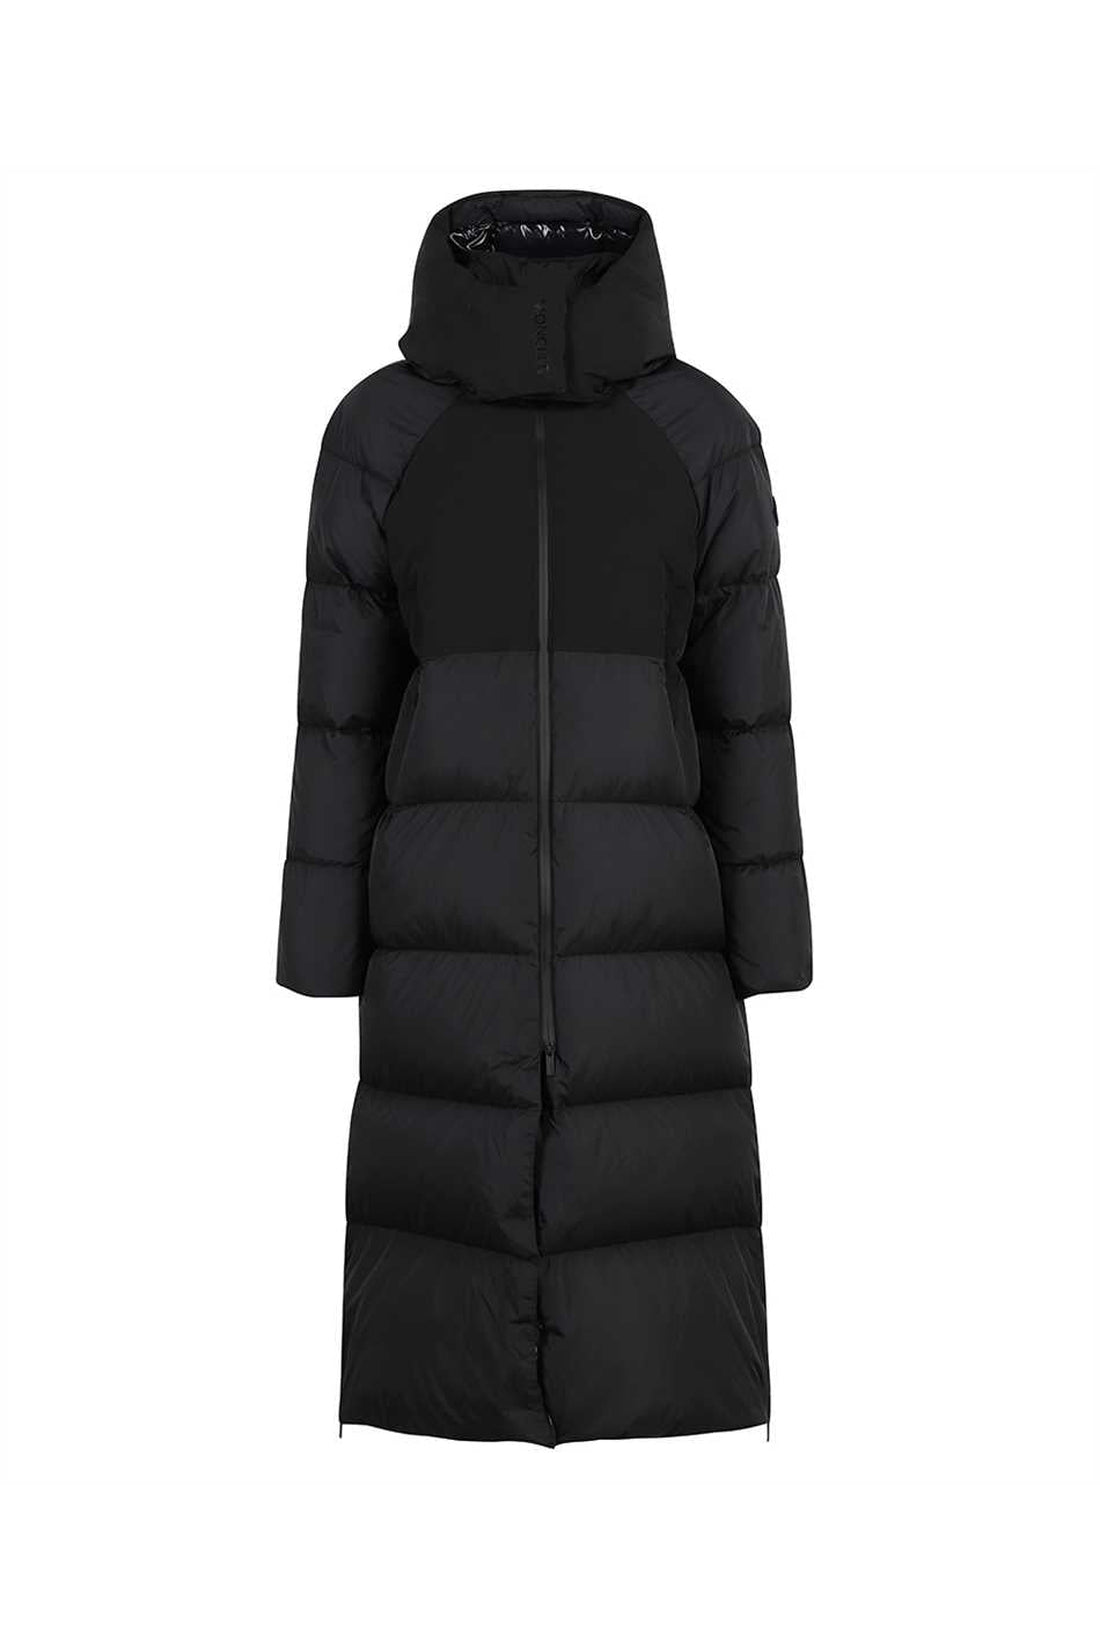 Moncler-OUTLET-SALE-Long hooded down jacket-ARCHIVIST